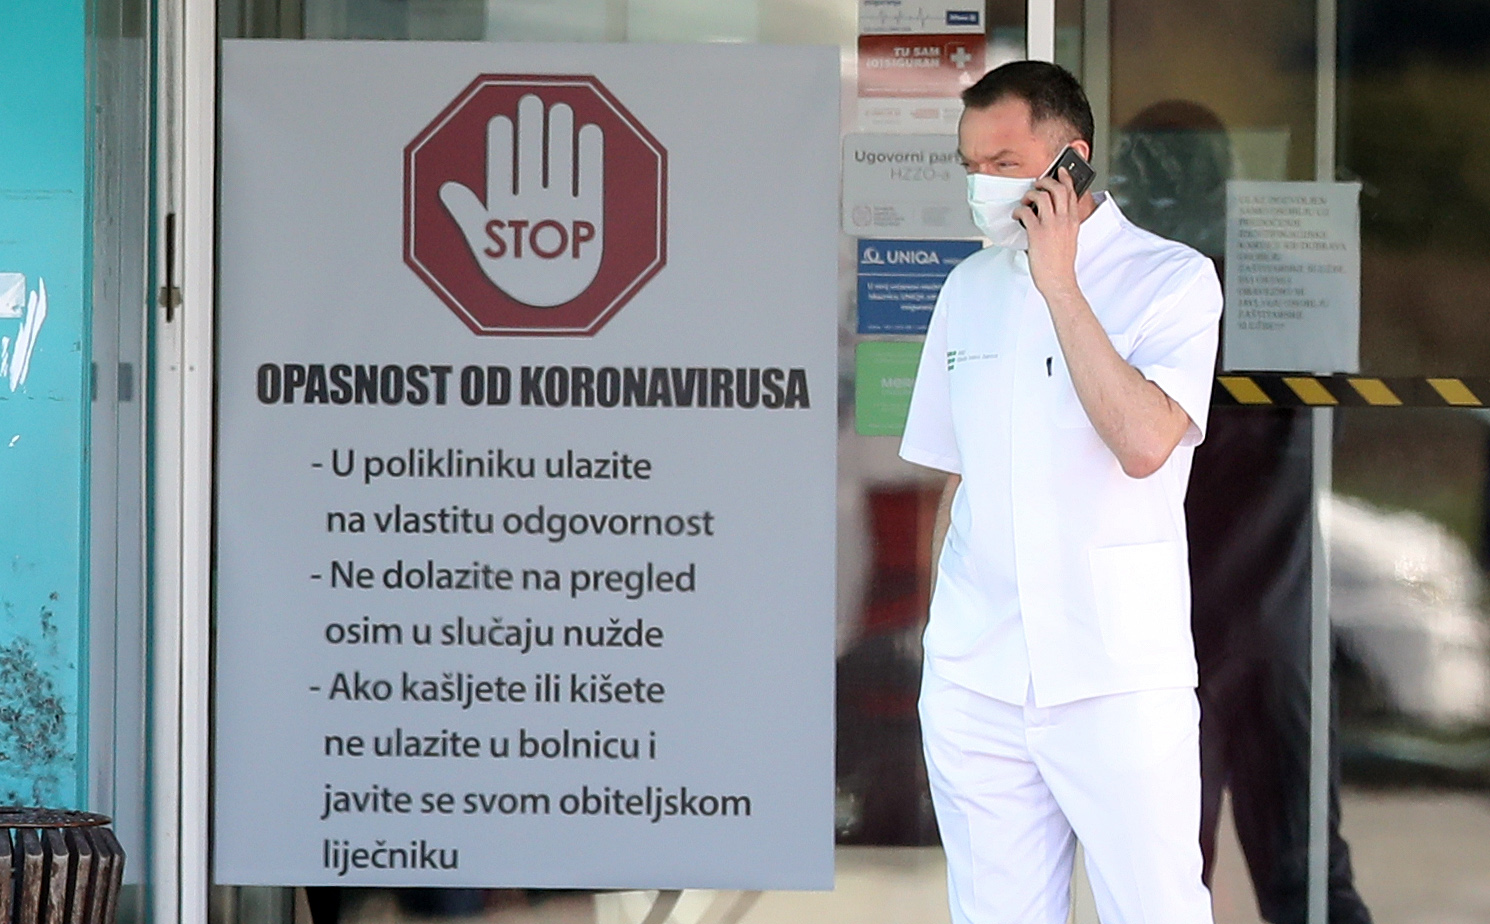 Croatian healthcare system